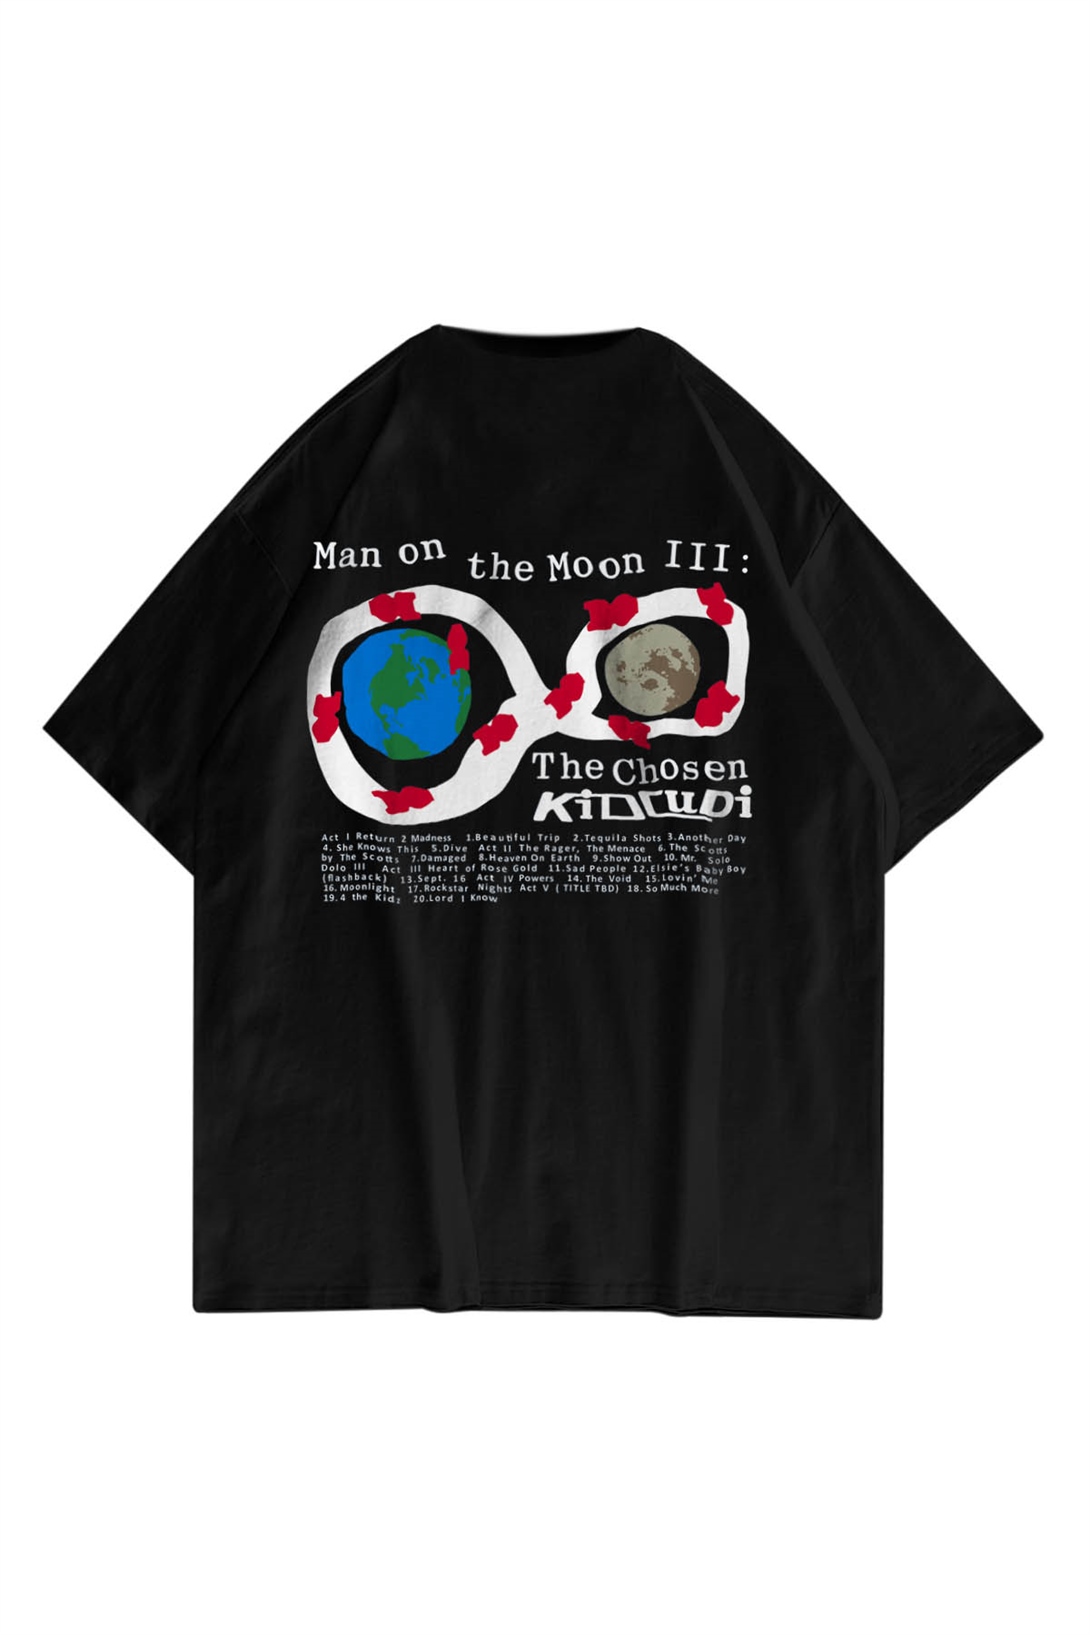 Trendiz Unisex Kid Cudi Man of the Moon 3 Siyah Tshirt